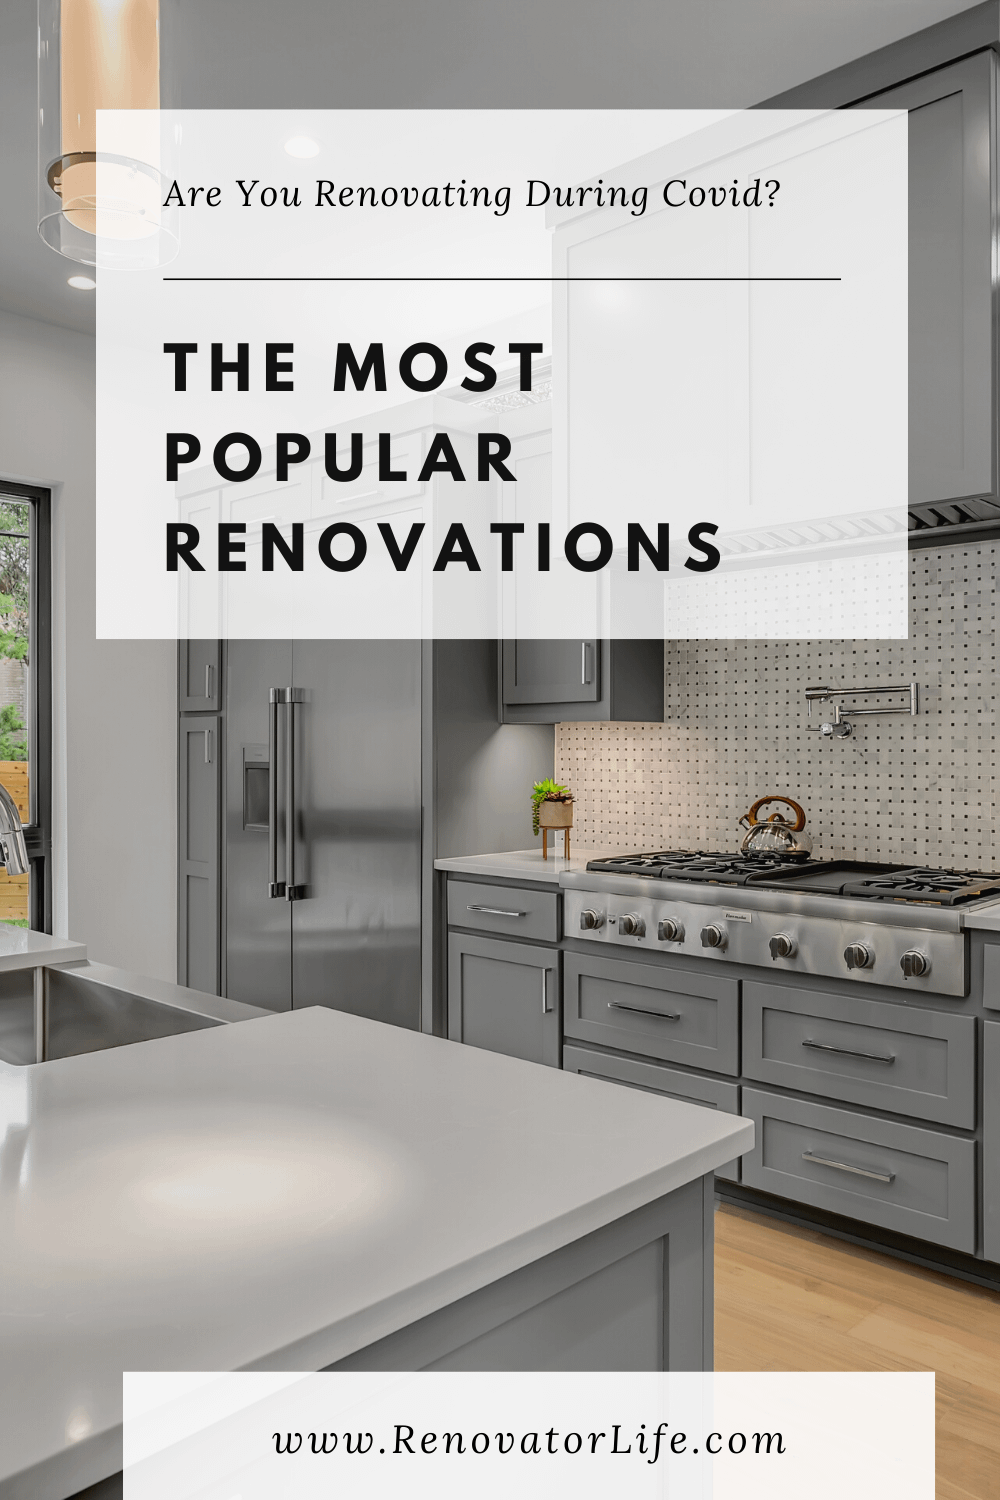 The Most Popular Renovations